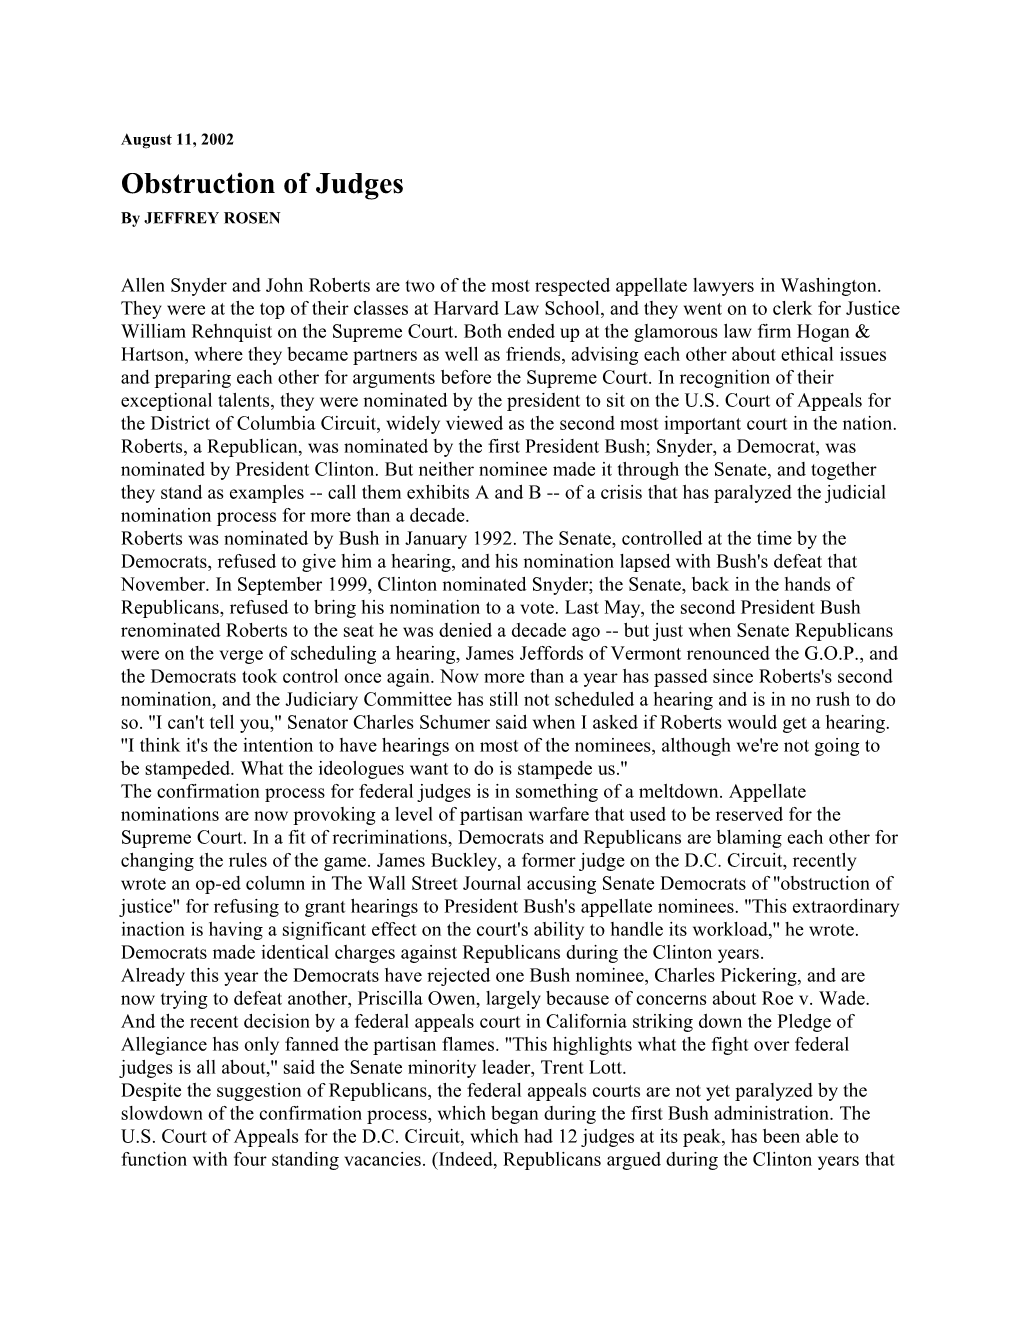 Obstruction of Judges